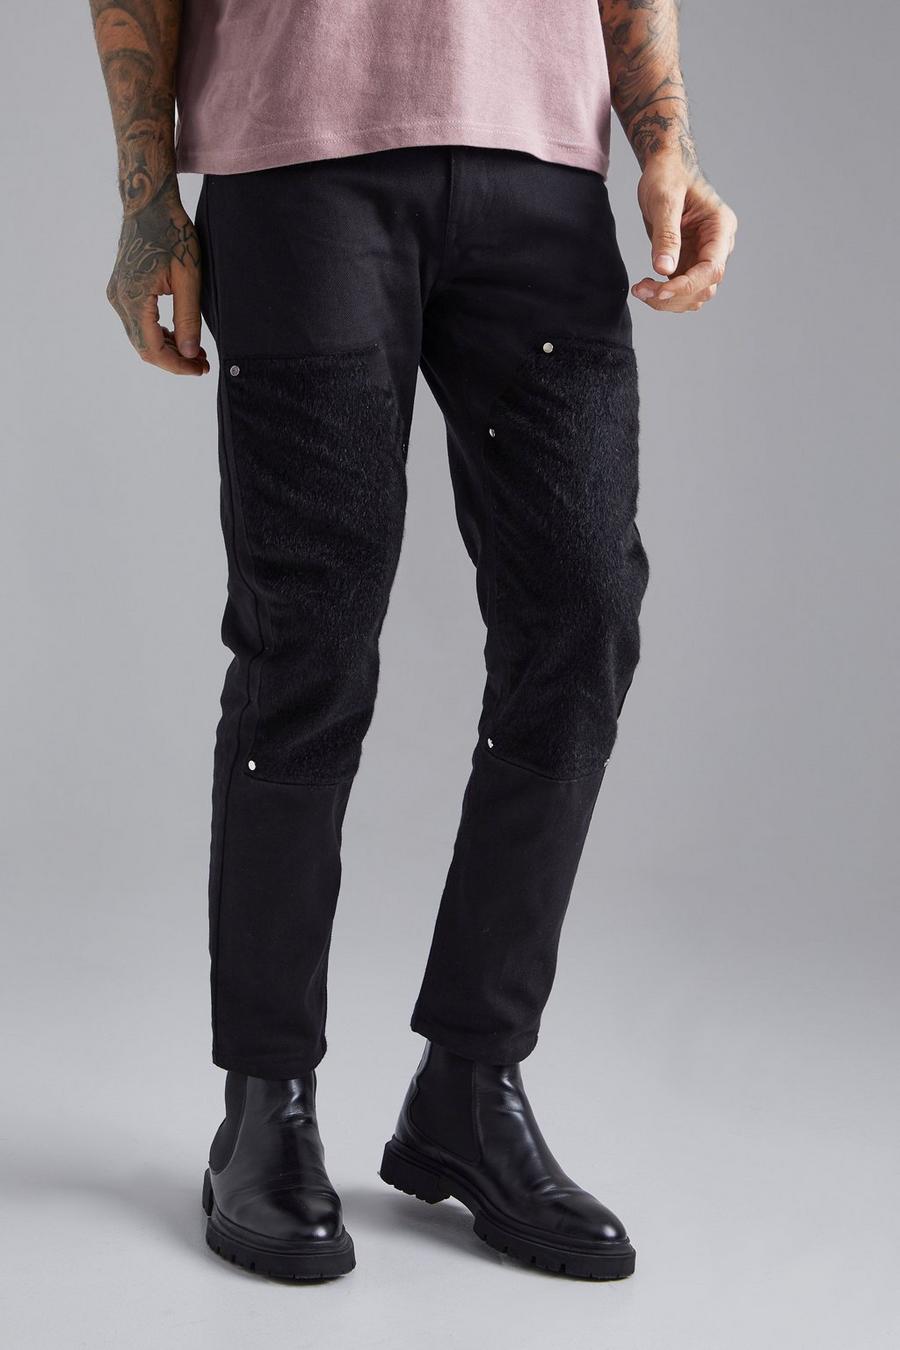 Black schwarz Slim Fit Faux Fur Utility JeansMet Panelen